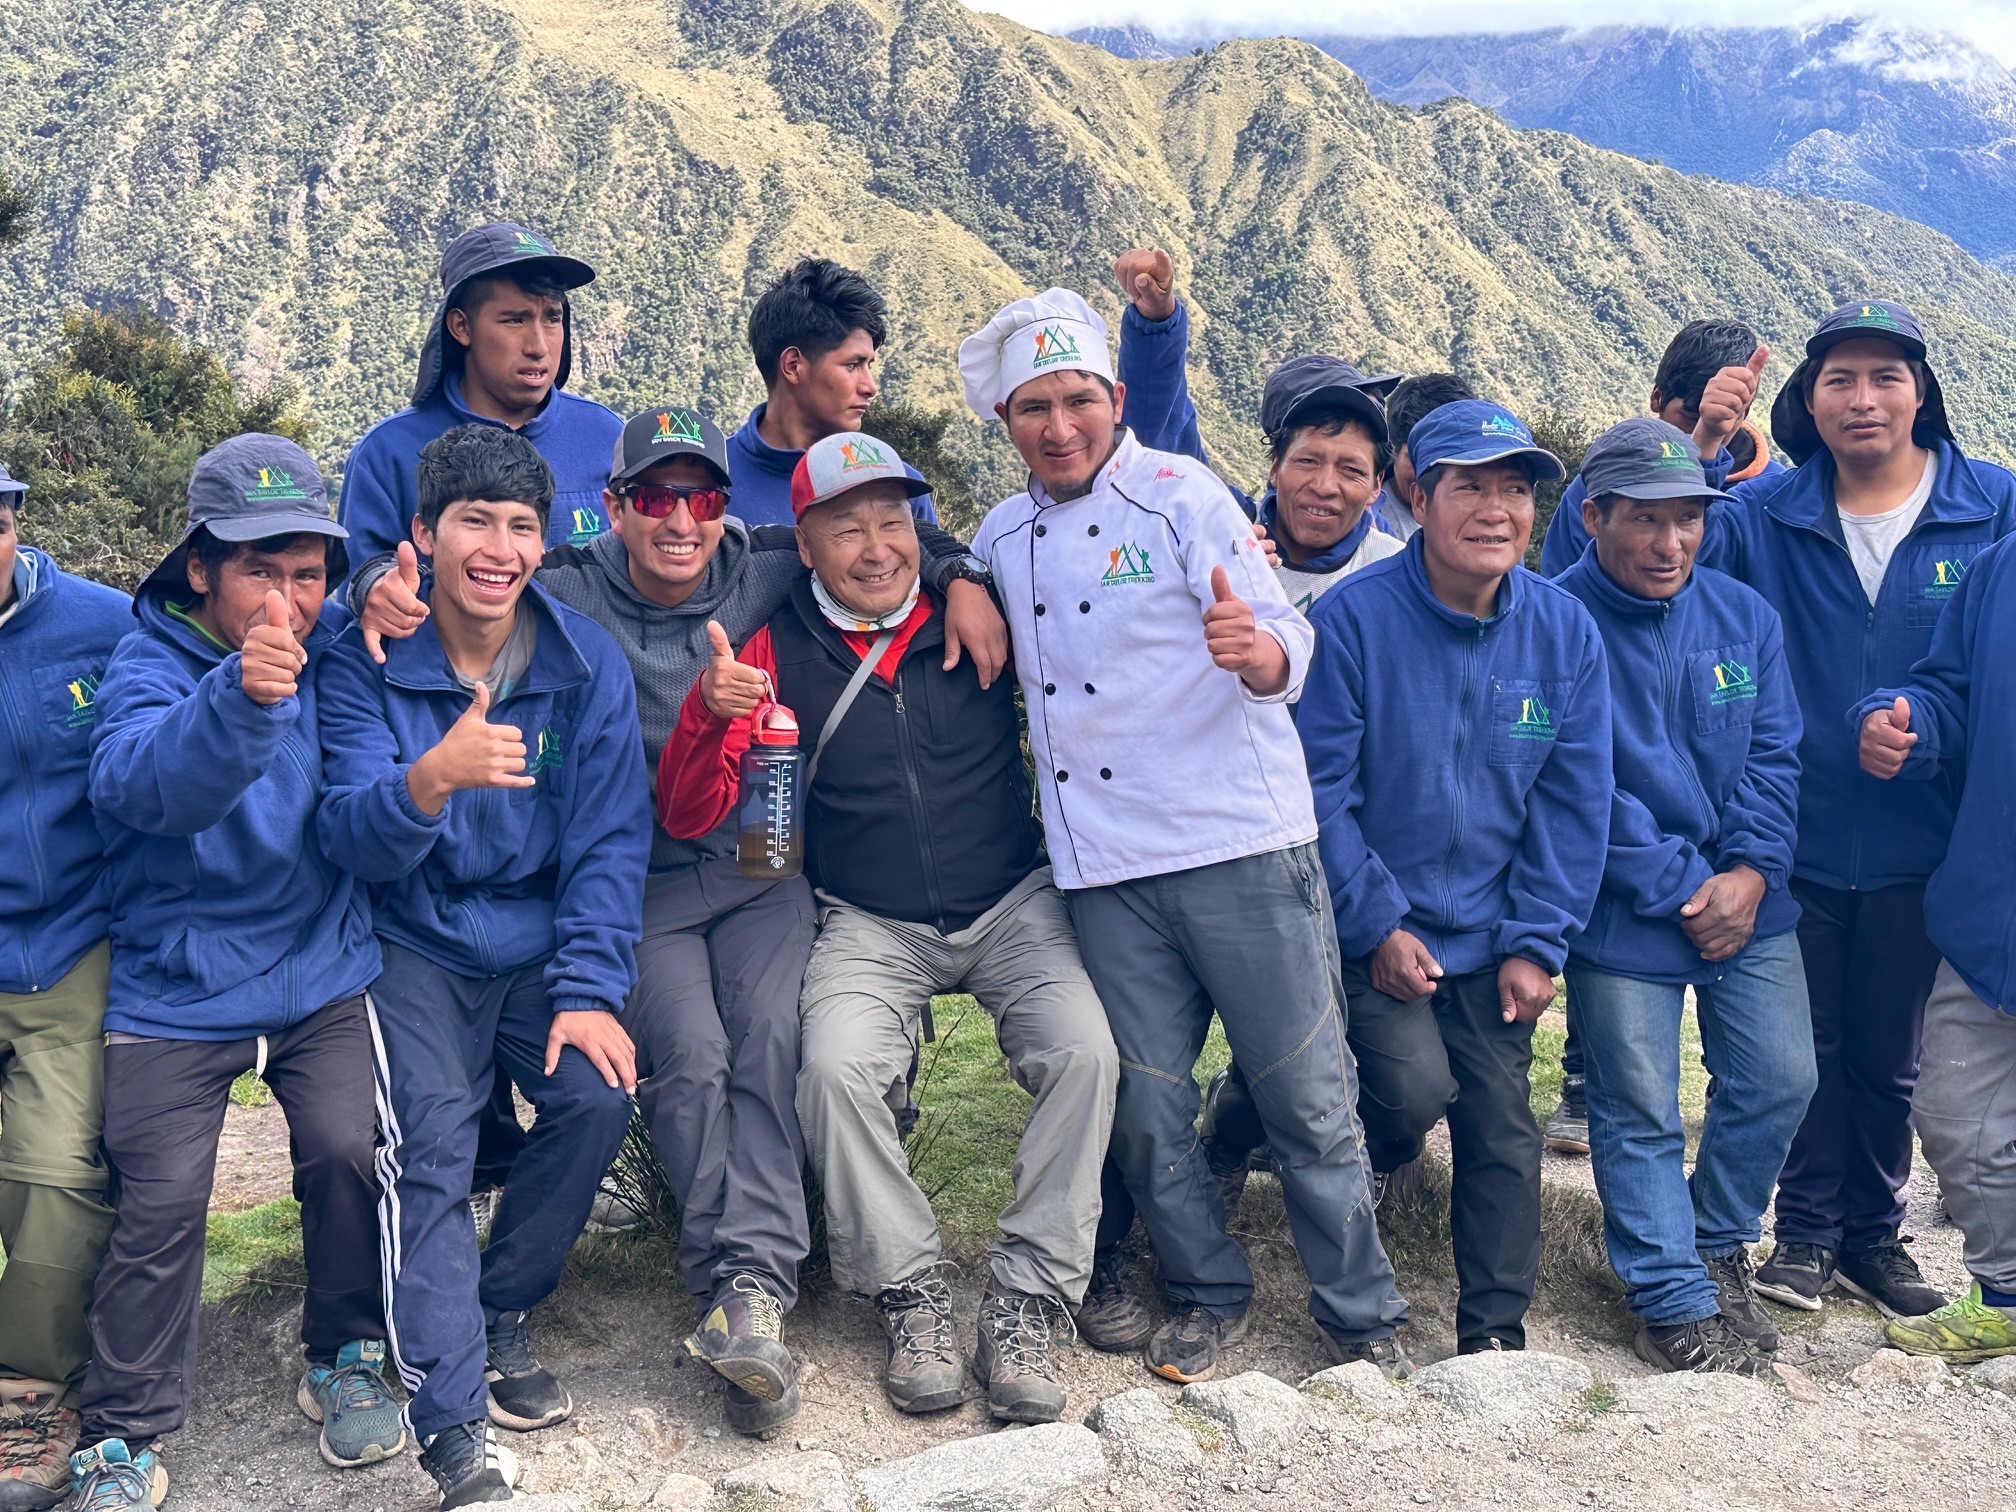 Multi-Functional Community Center for Inca Trail Porters